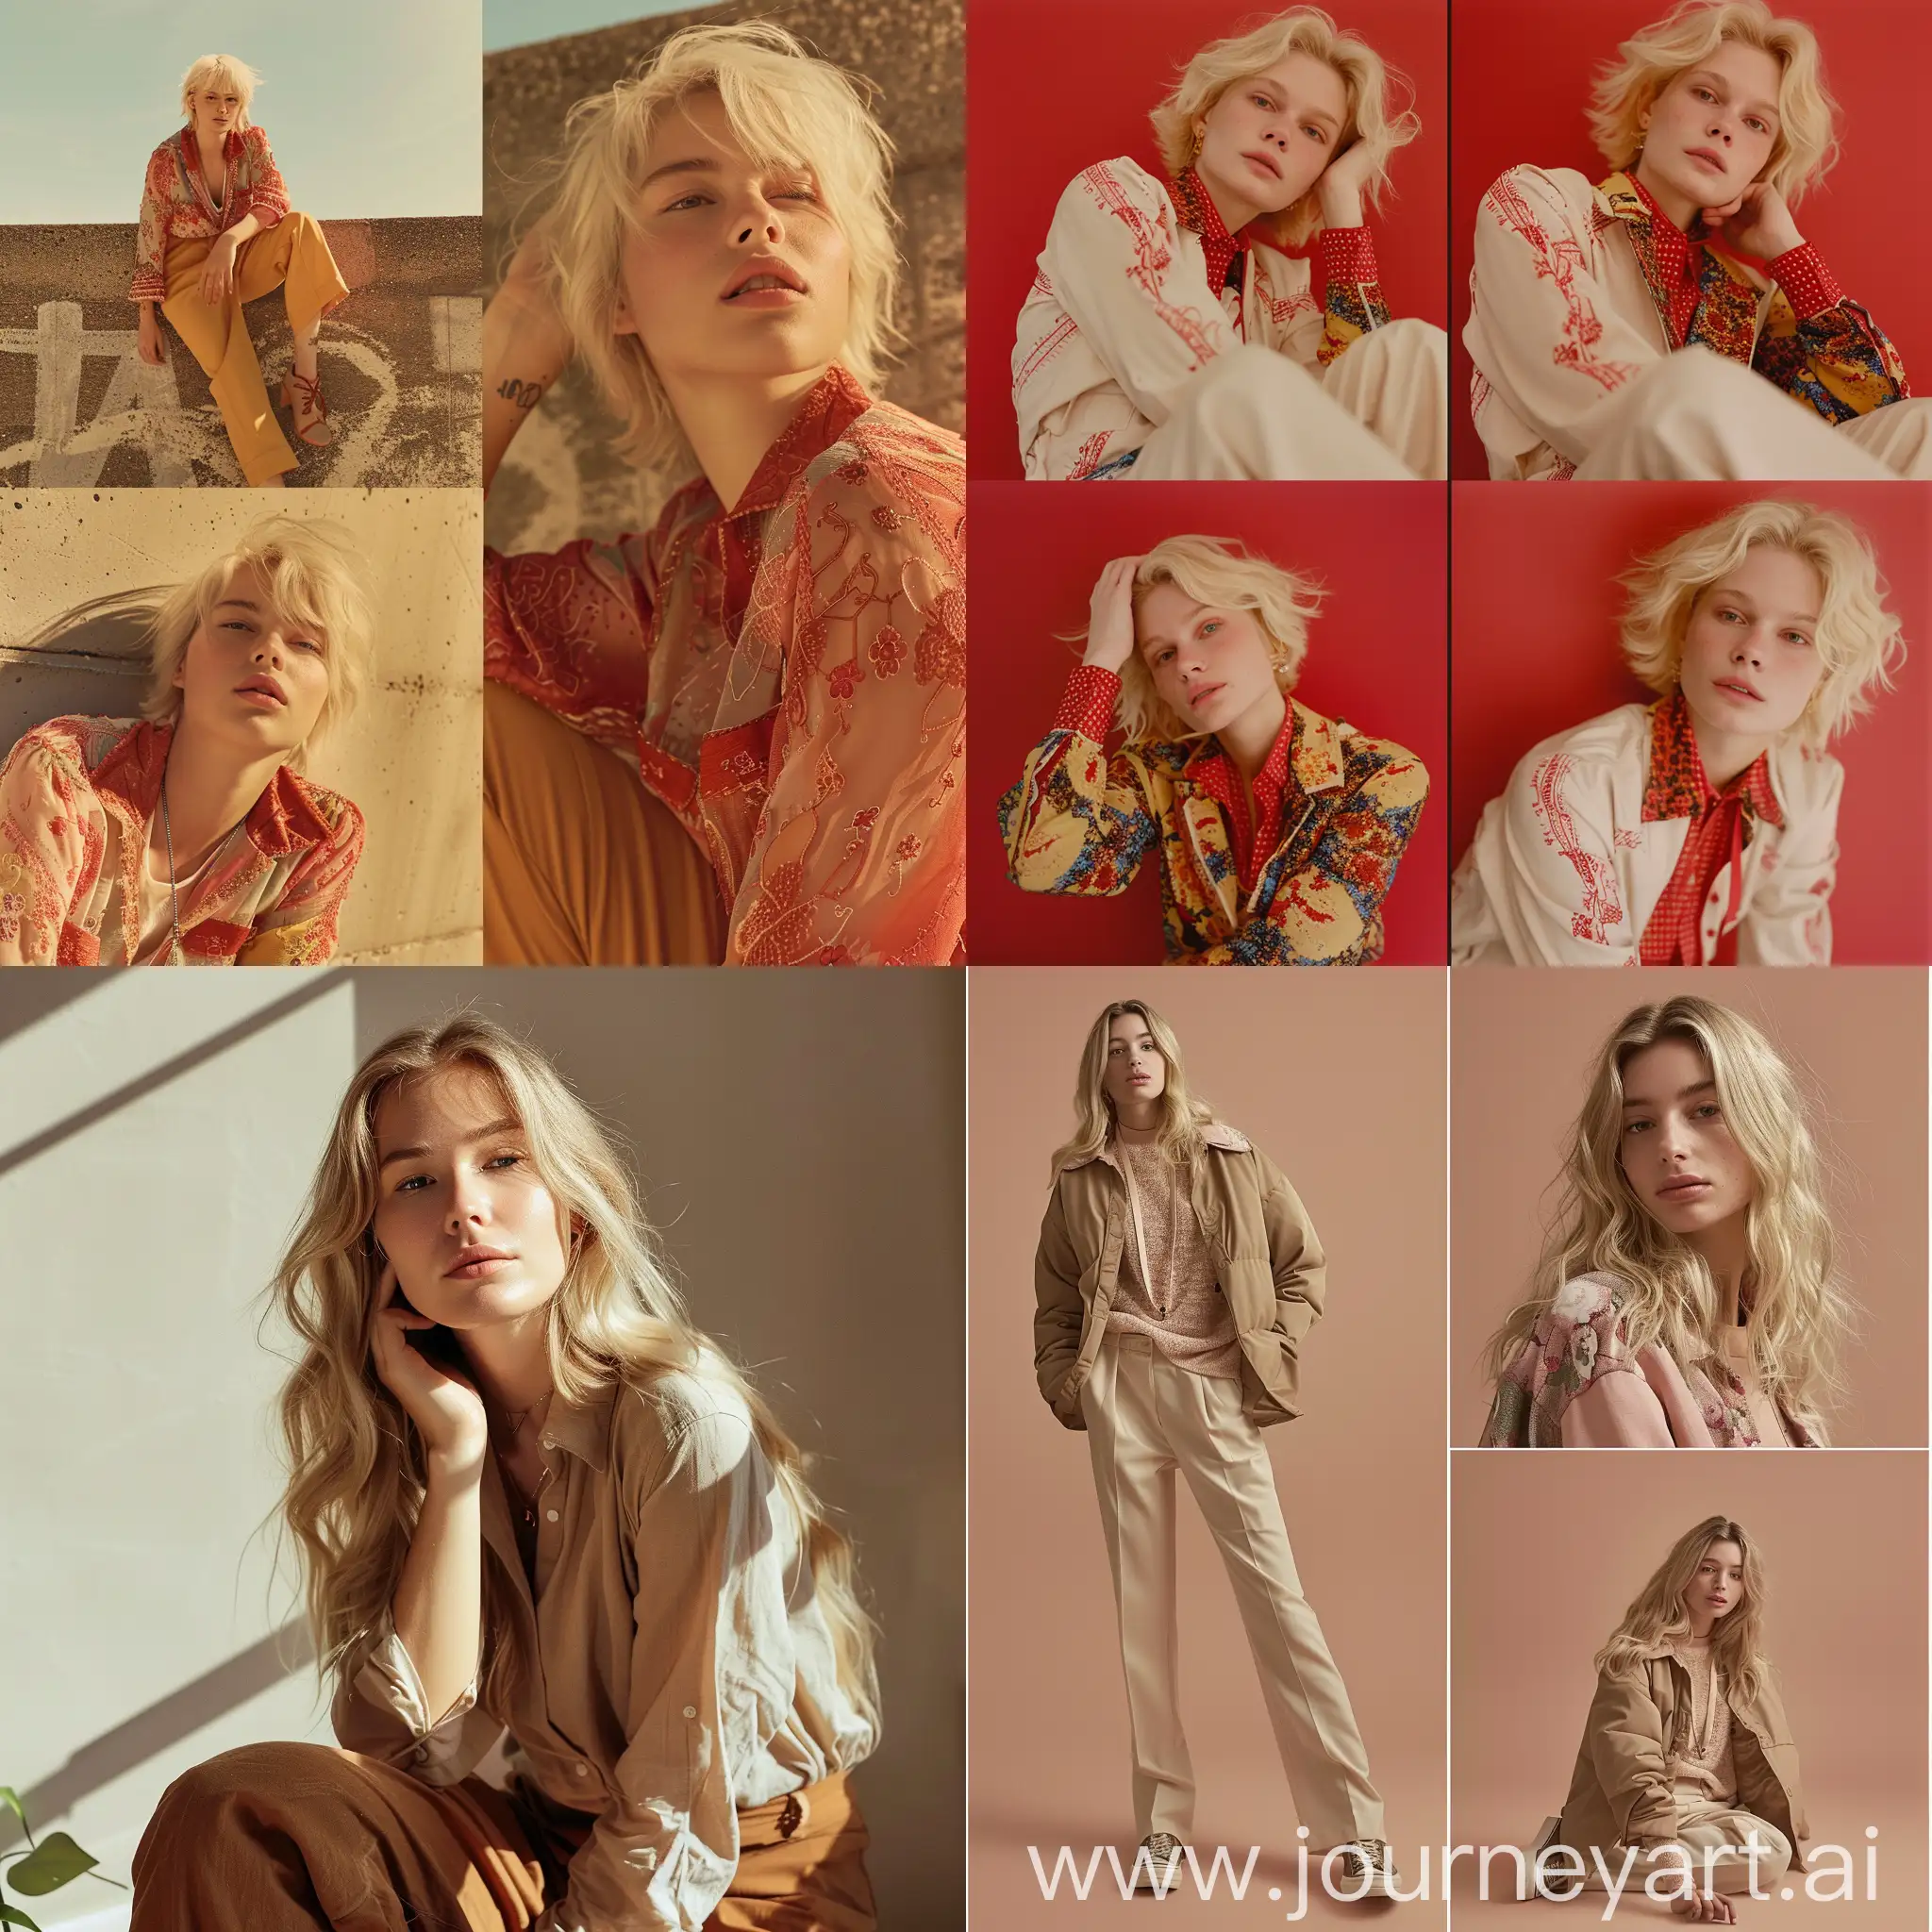 Stylish-Blonde-Woman-Modeling-Zara-Collection-Apparel